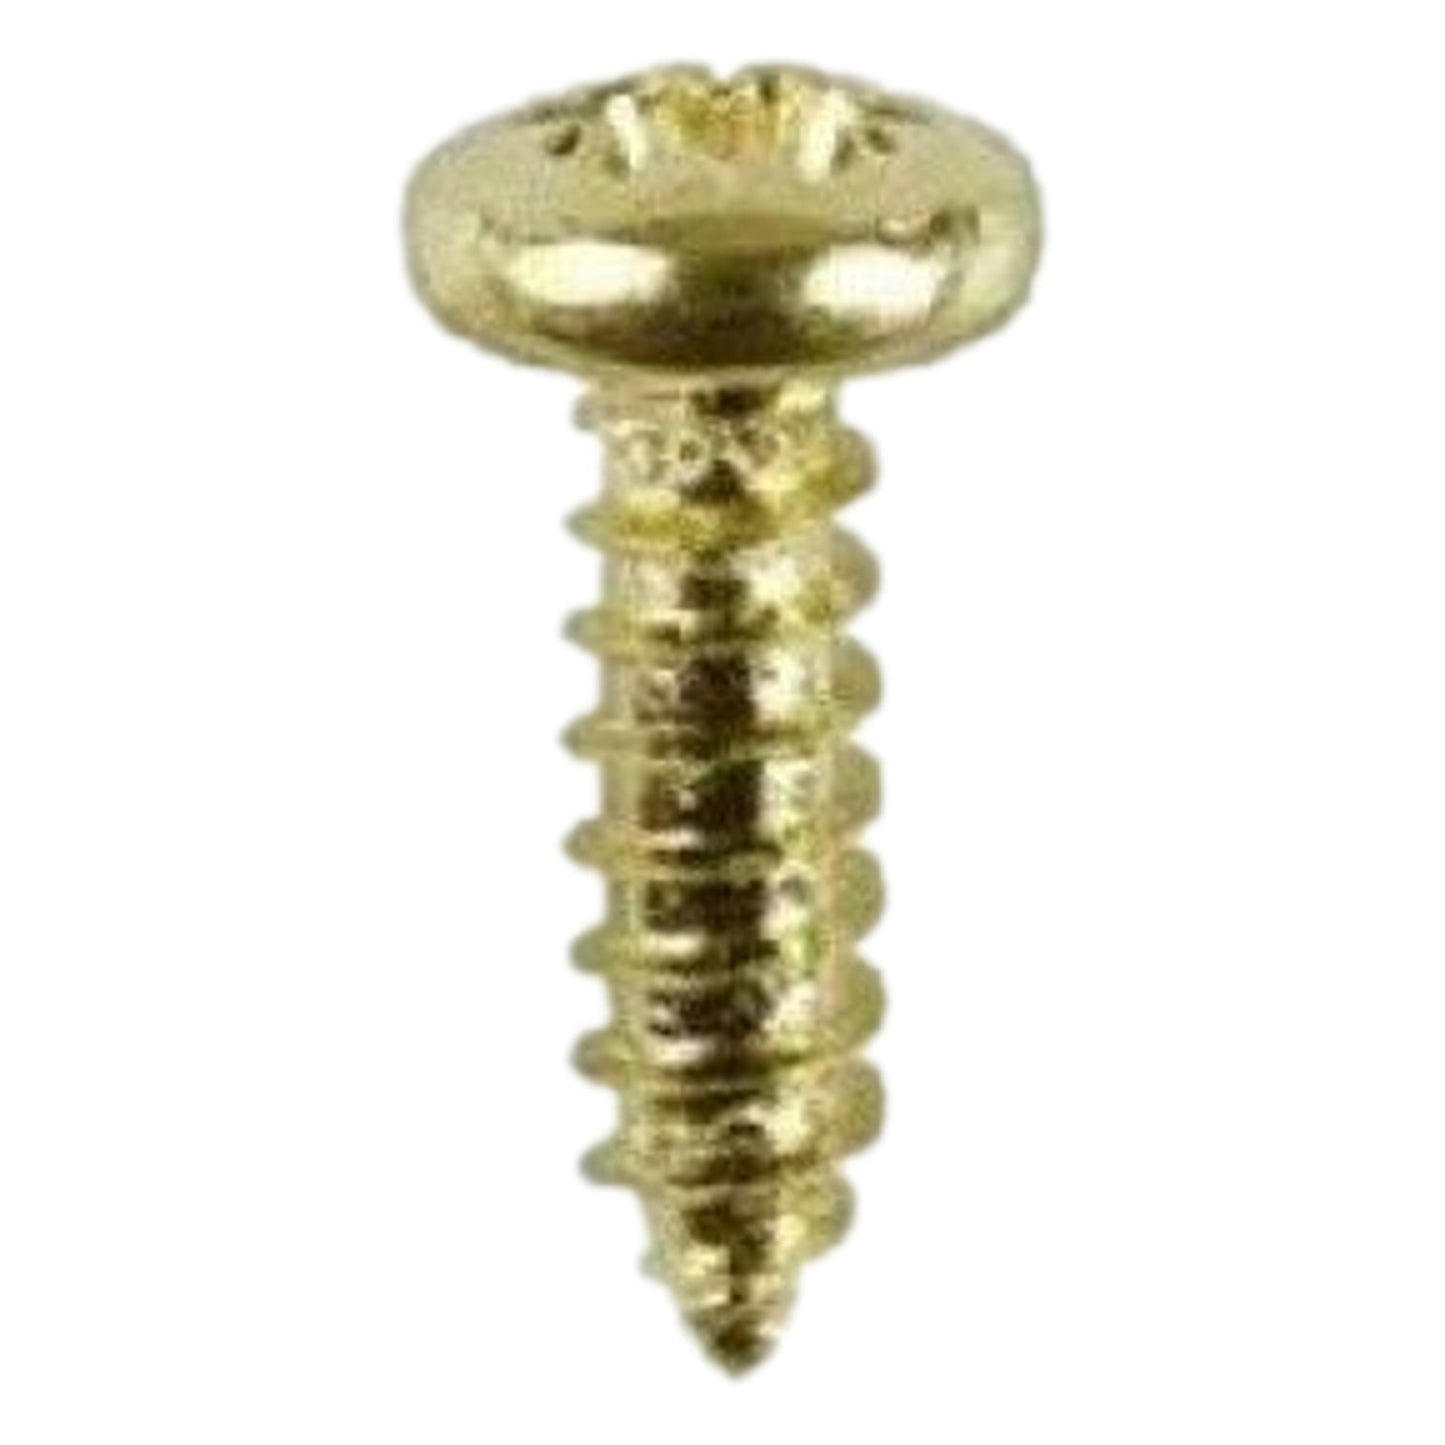 Taskar Brass Picture Hanging D Rings & Screws (500 Pack)